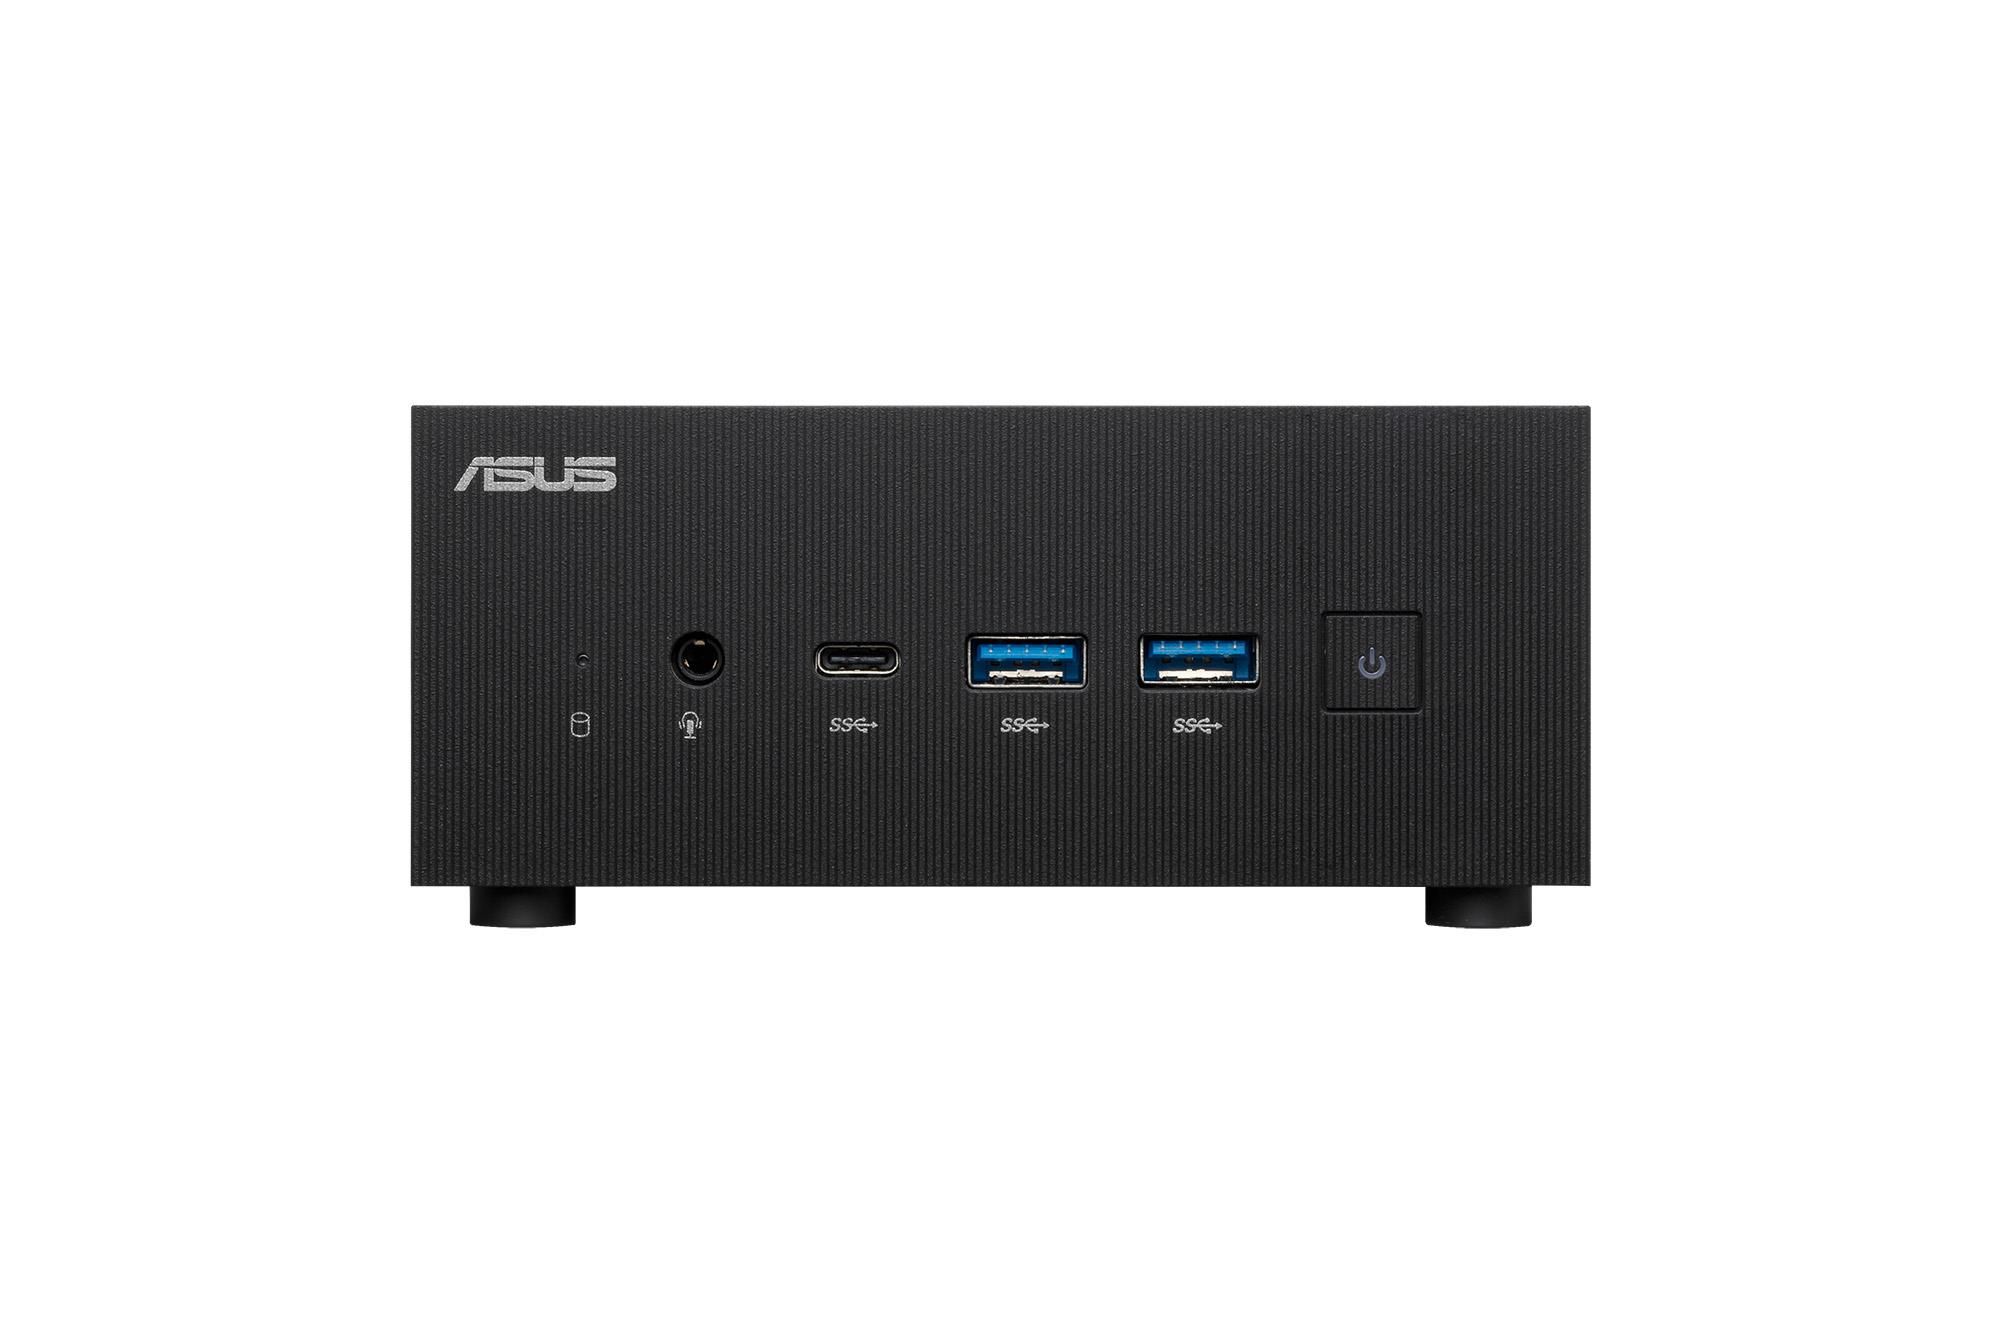 Asus PN52-BBR959XD Mini PC